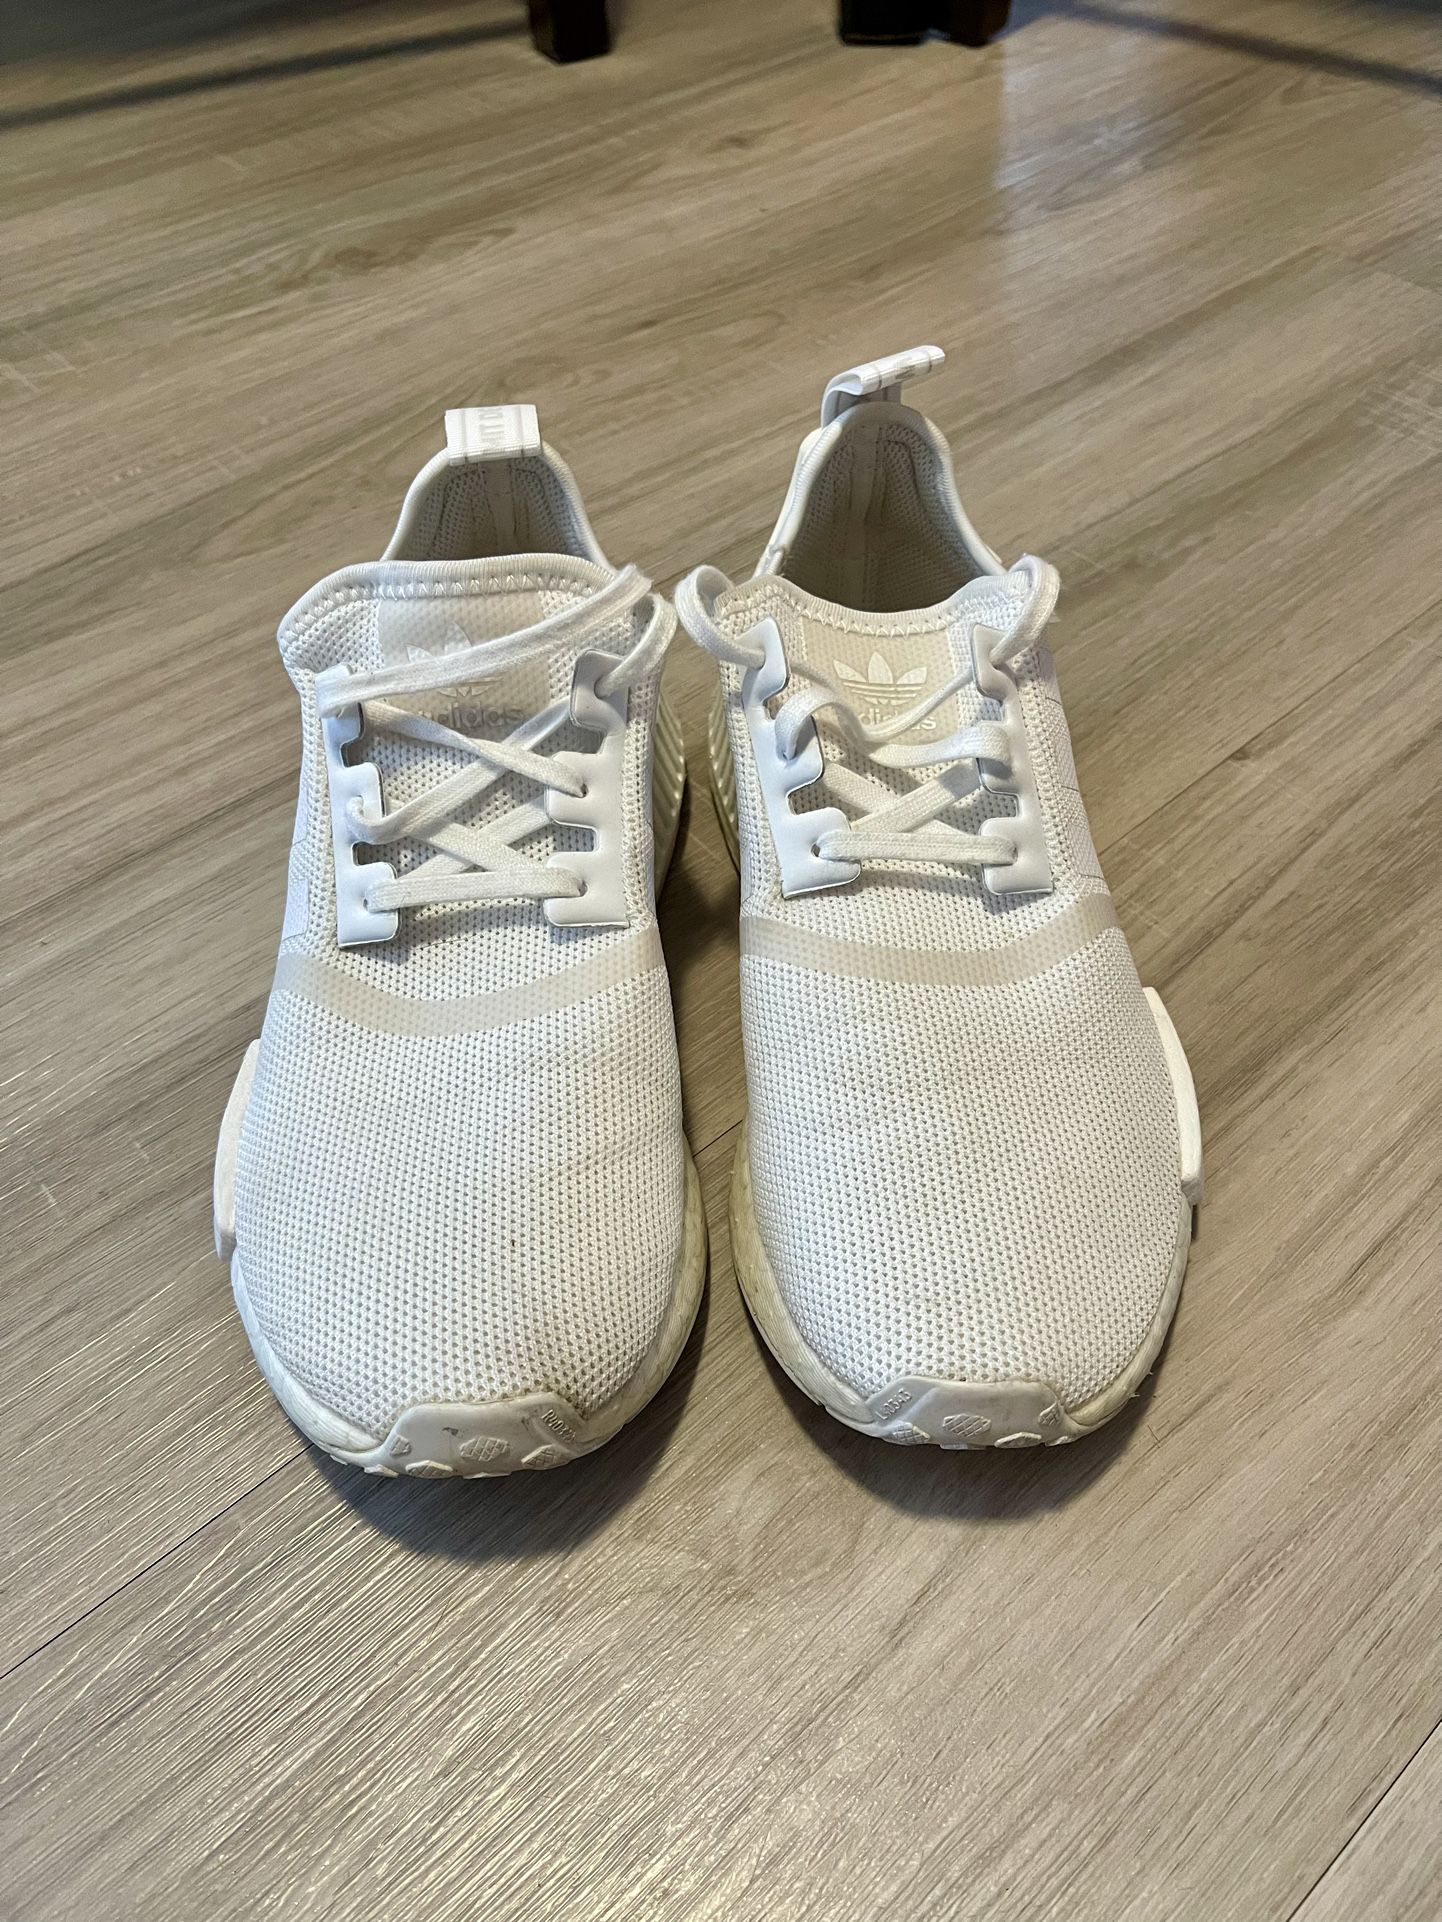 Tennis Shoes- Adidas